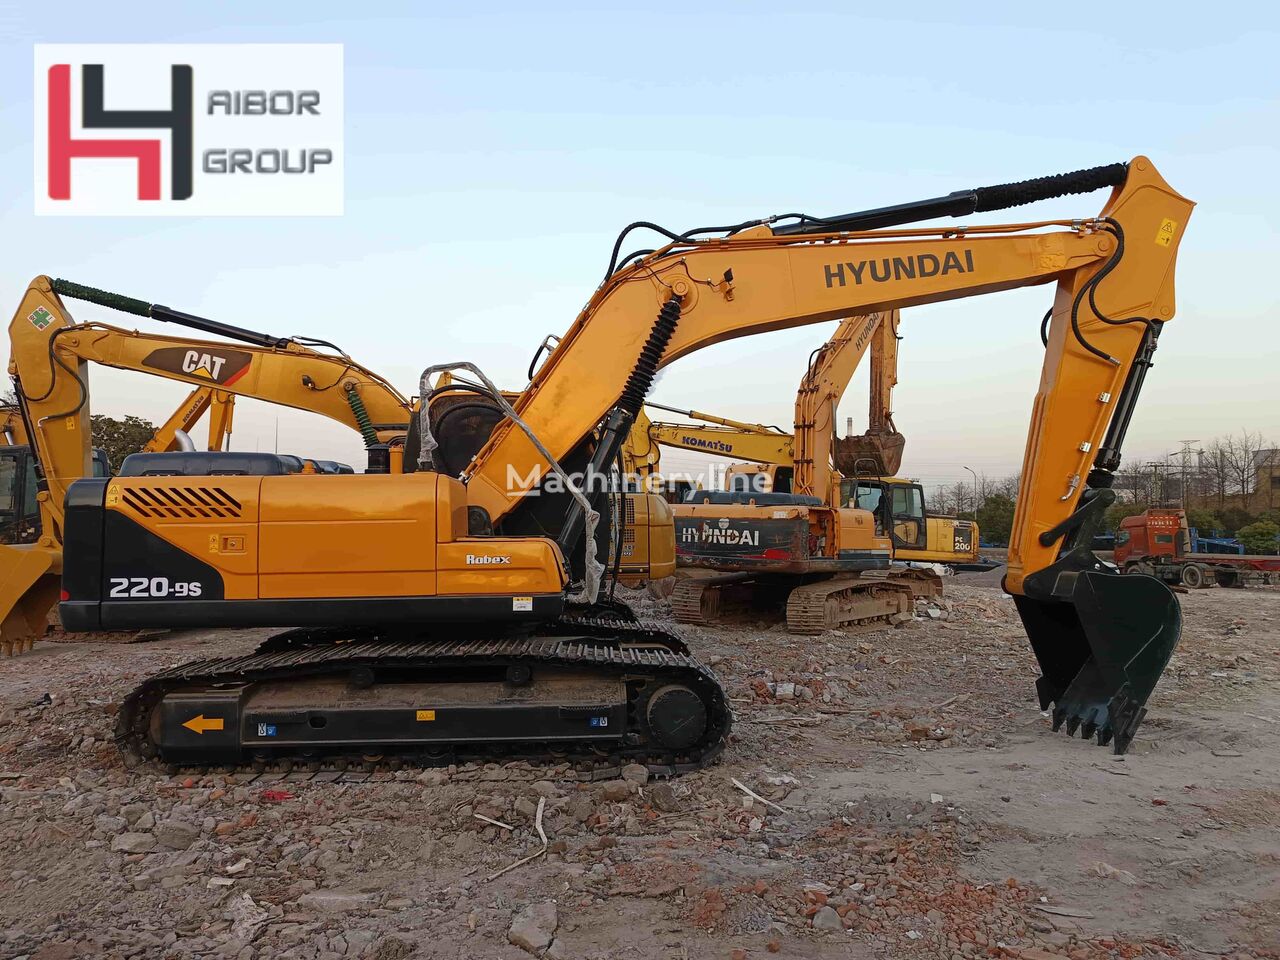 Hyundai R220LC-9s tracked excavator